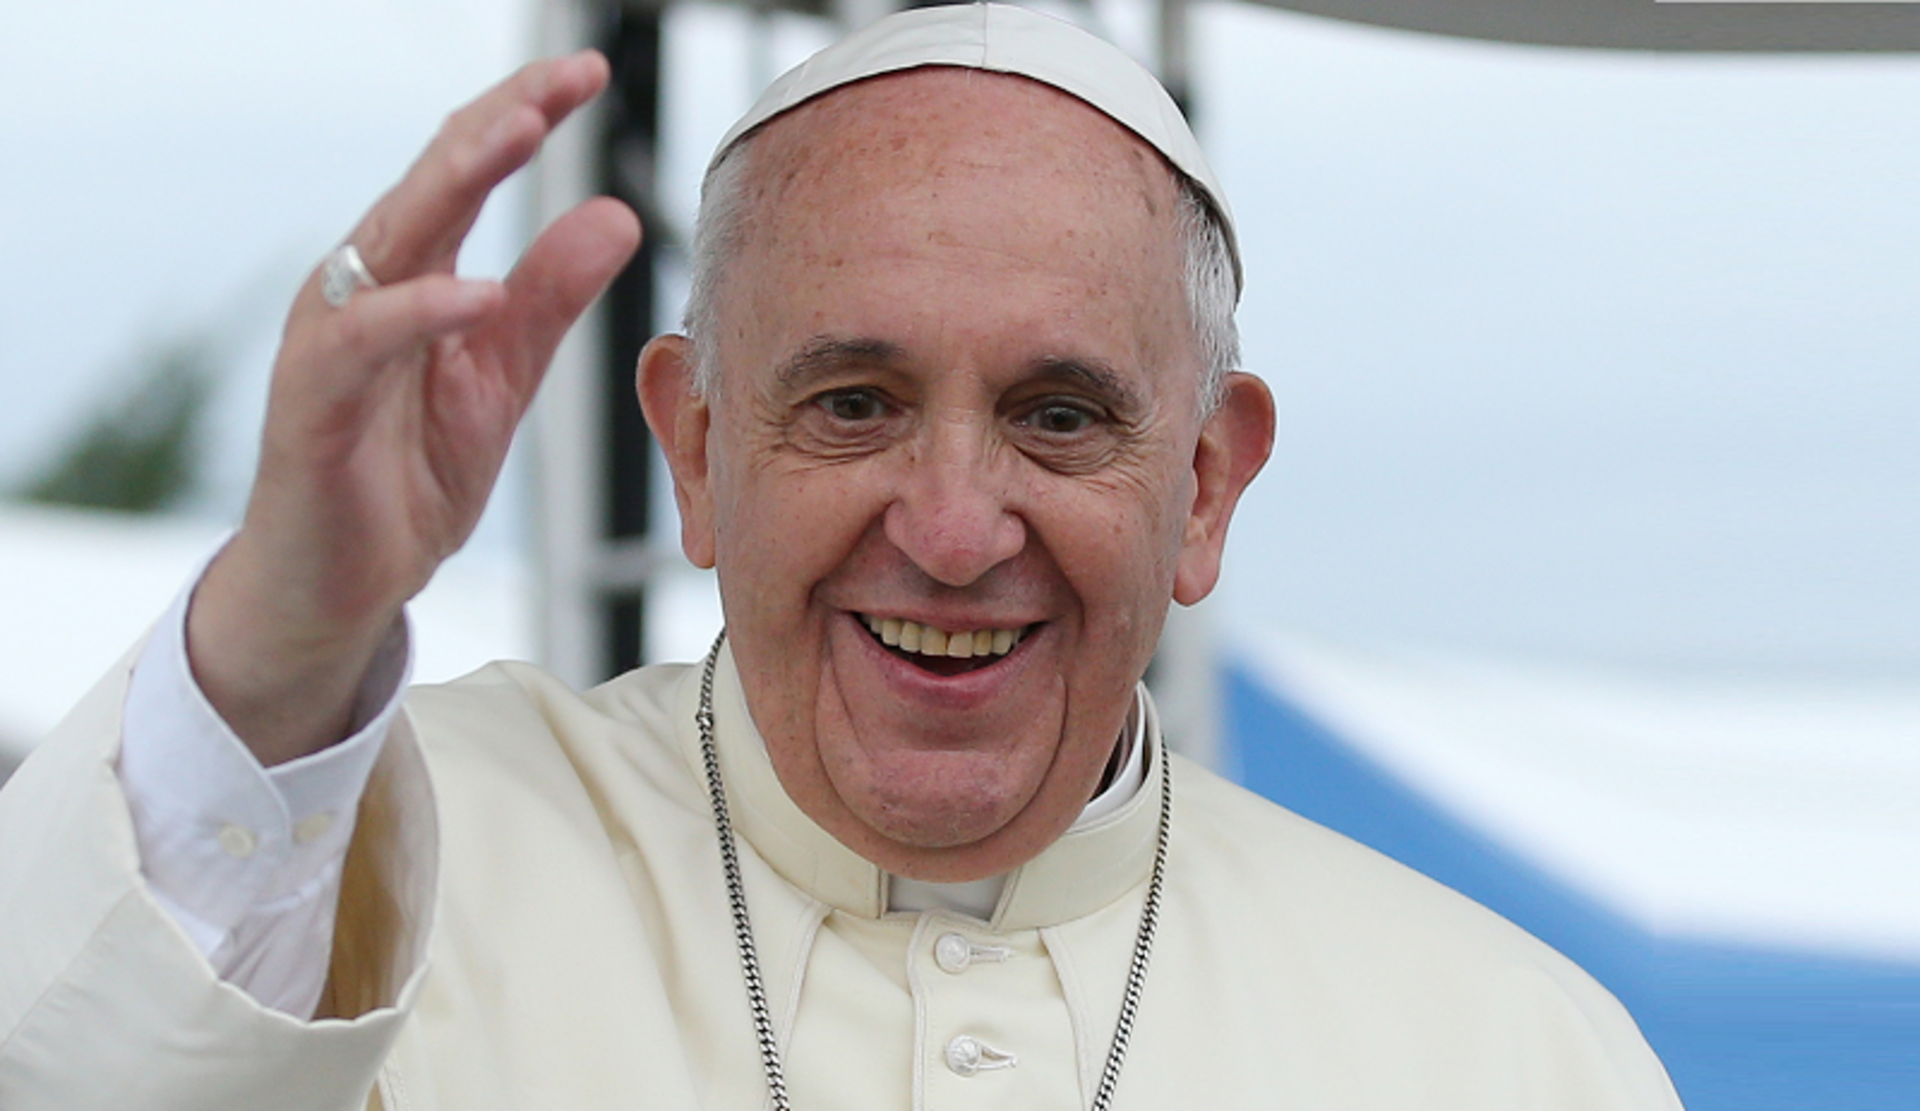 Папа римский говорит. Папа Франциск. Папа Римский Франци́ск. Понтифик папа Римский Франциск. Франциск (папа Римский) фото.